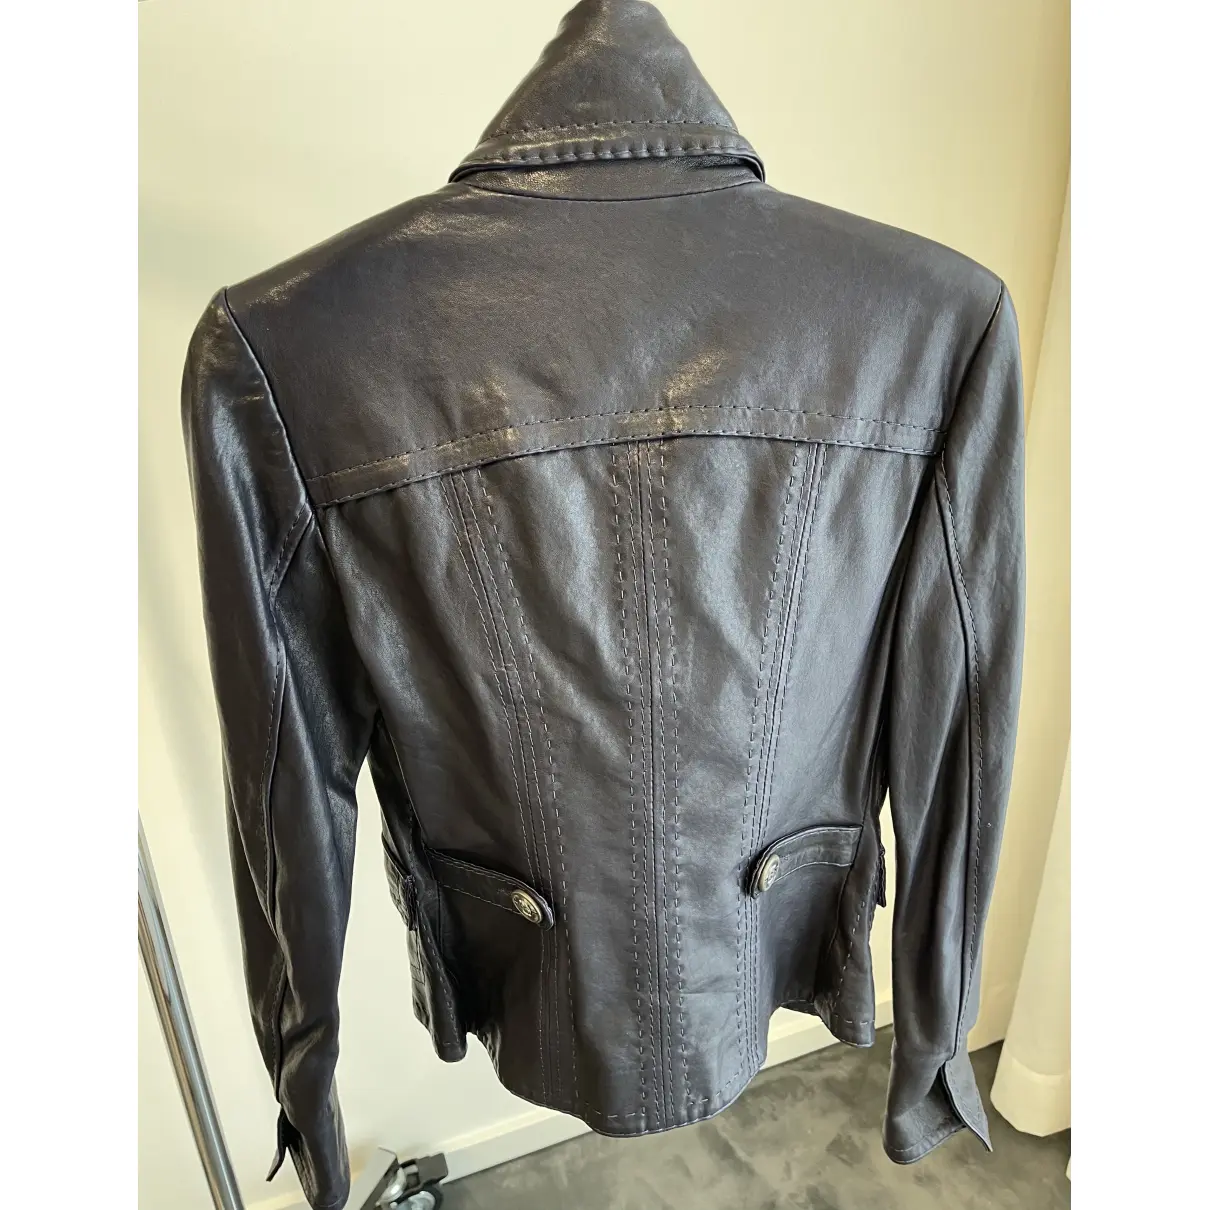 Buy Just Cavalli Leather jacket online - Vintage